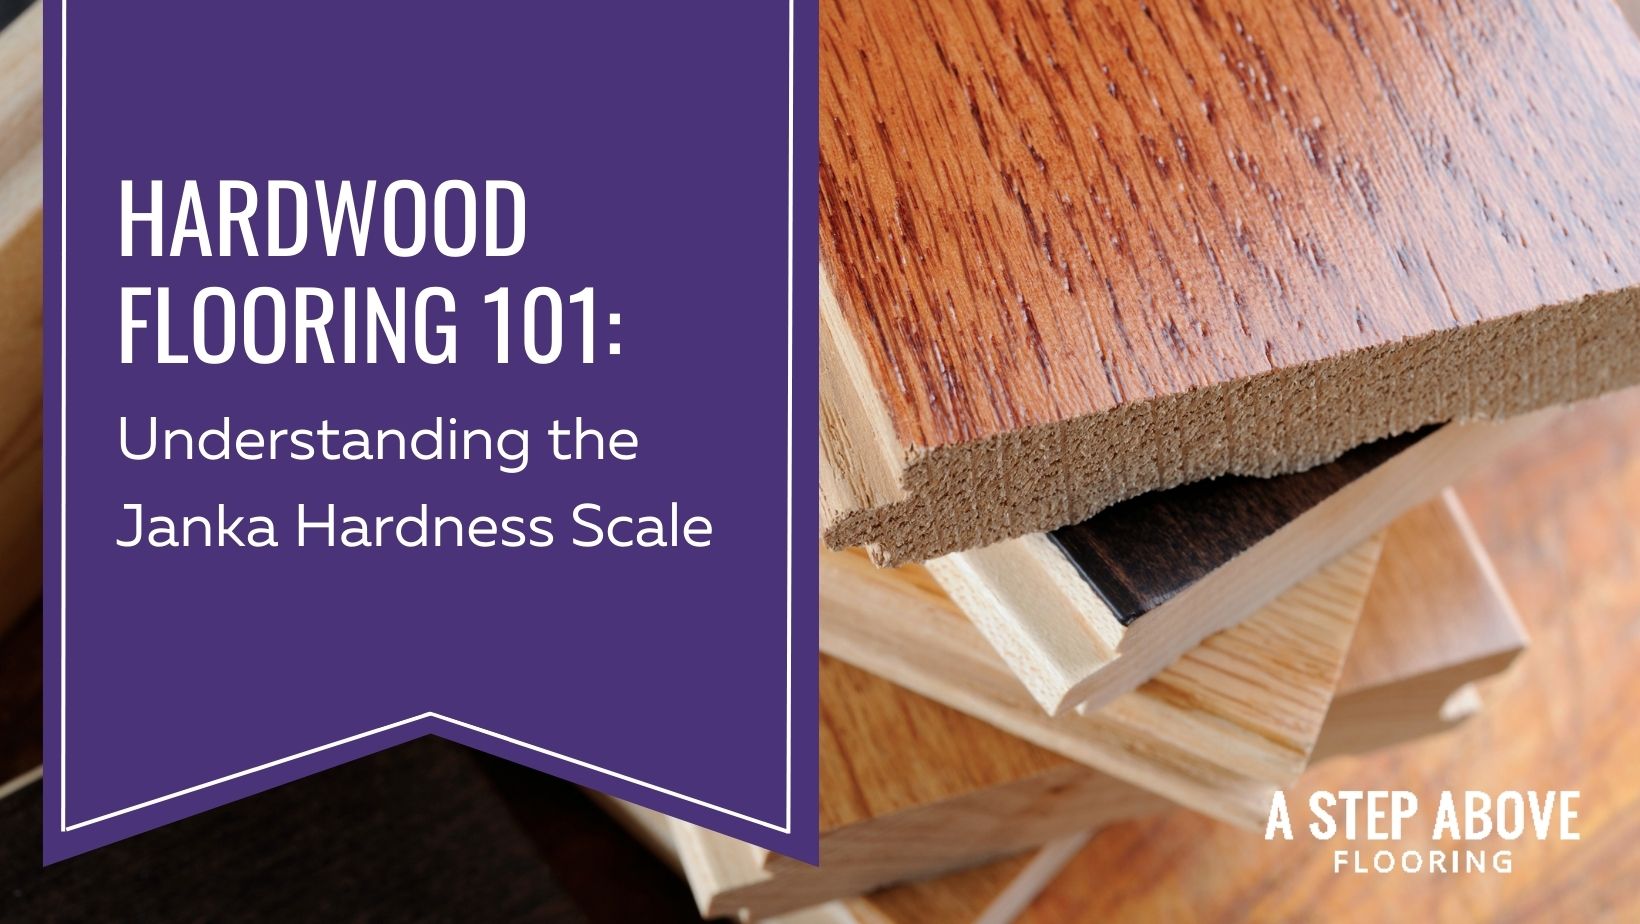 Hardwood Flooring 101: Understanding the Janka Hardness Scale